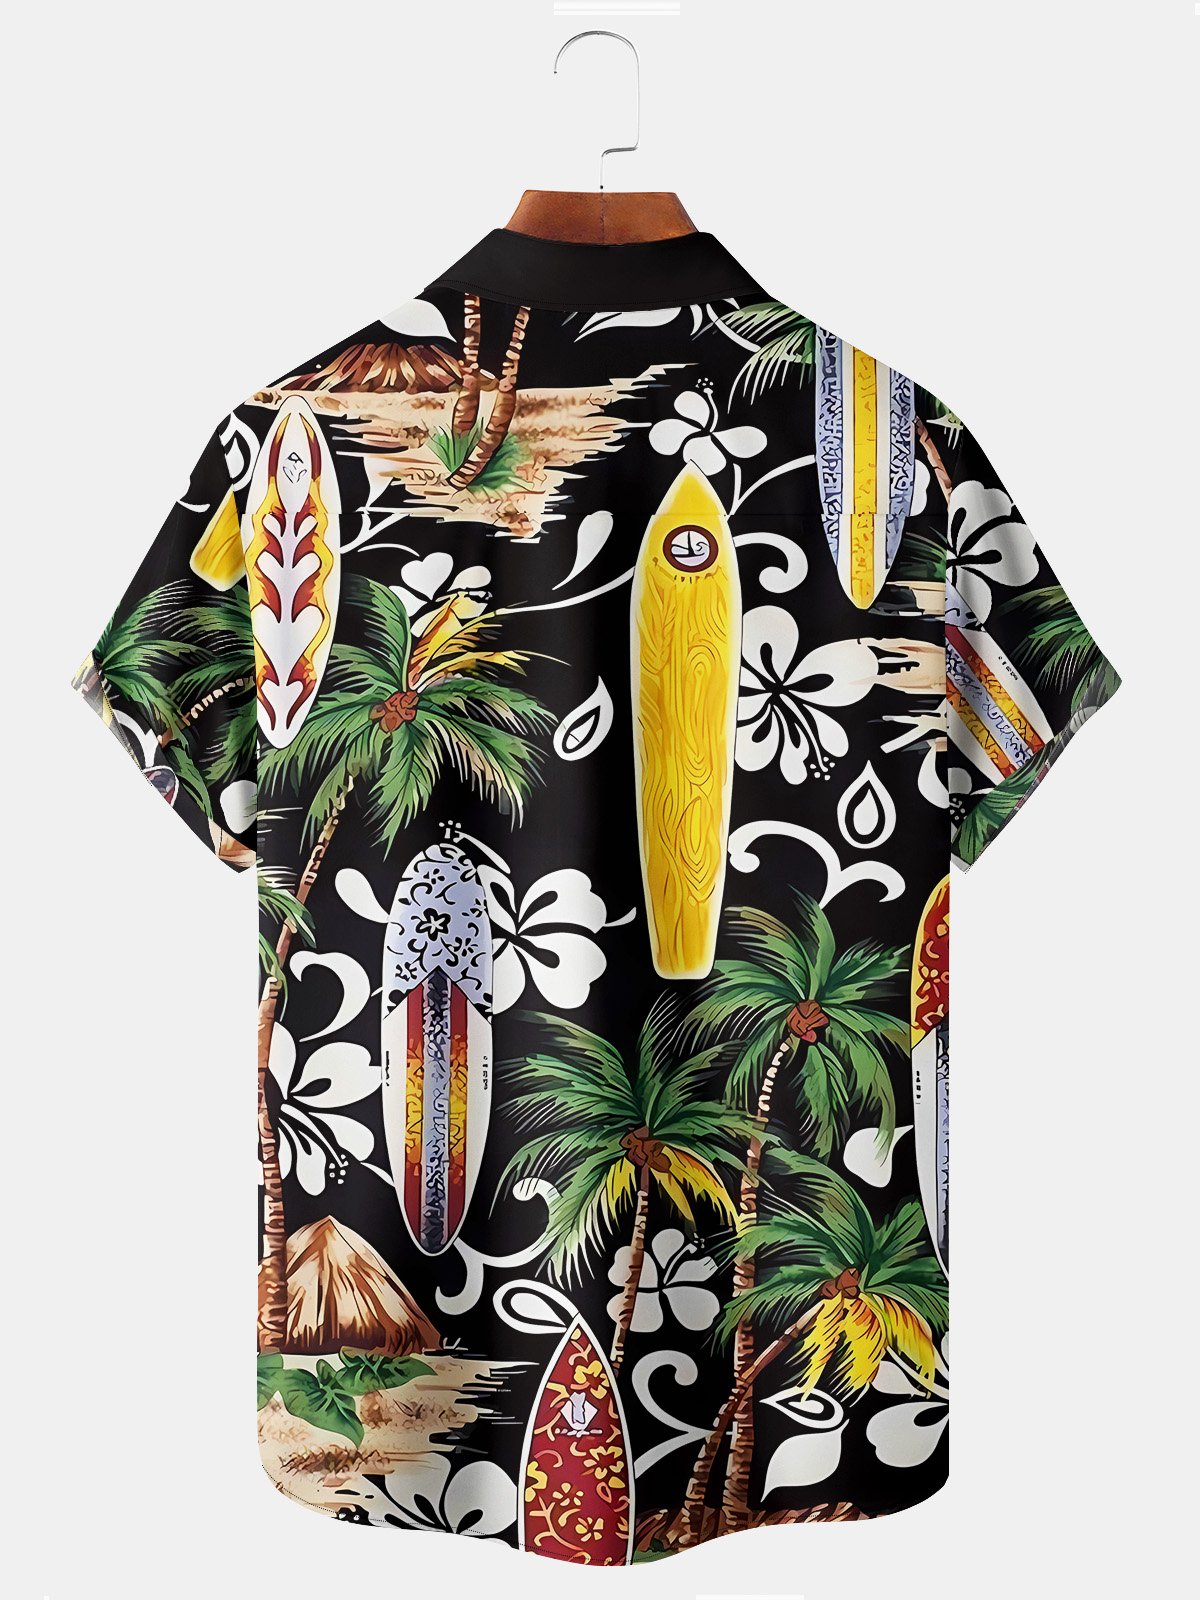 Royaura Beach Vacation Men's Black Hawaiian Shirts Coconut Tree Surfboard Art Stretch Plus Size Aloha Casual Camp Pocket Shirts